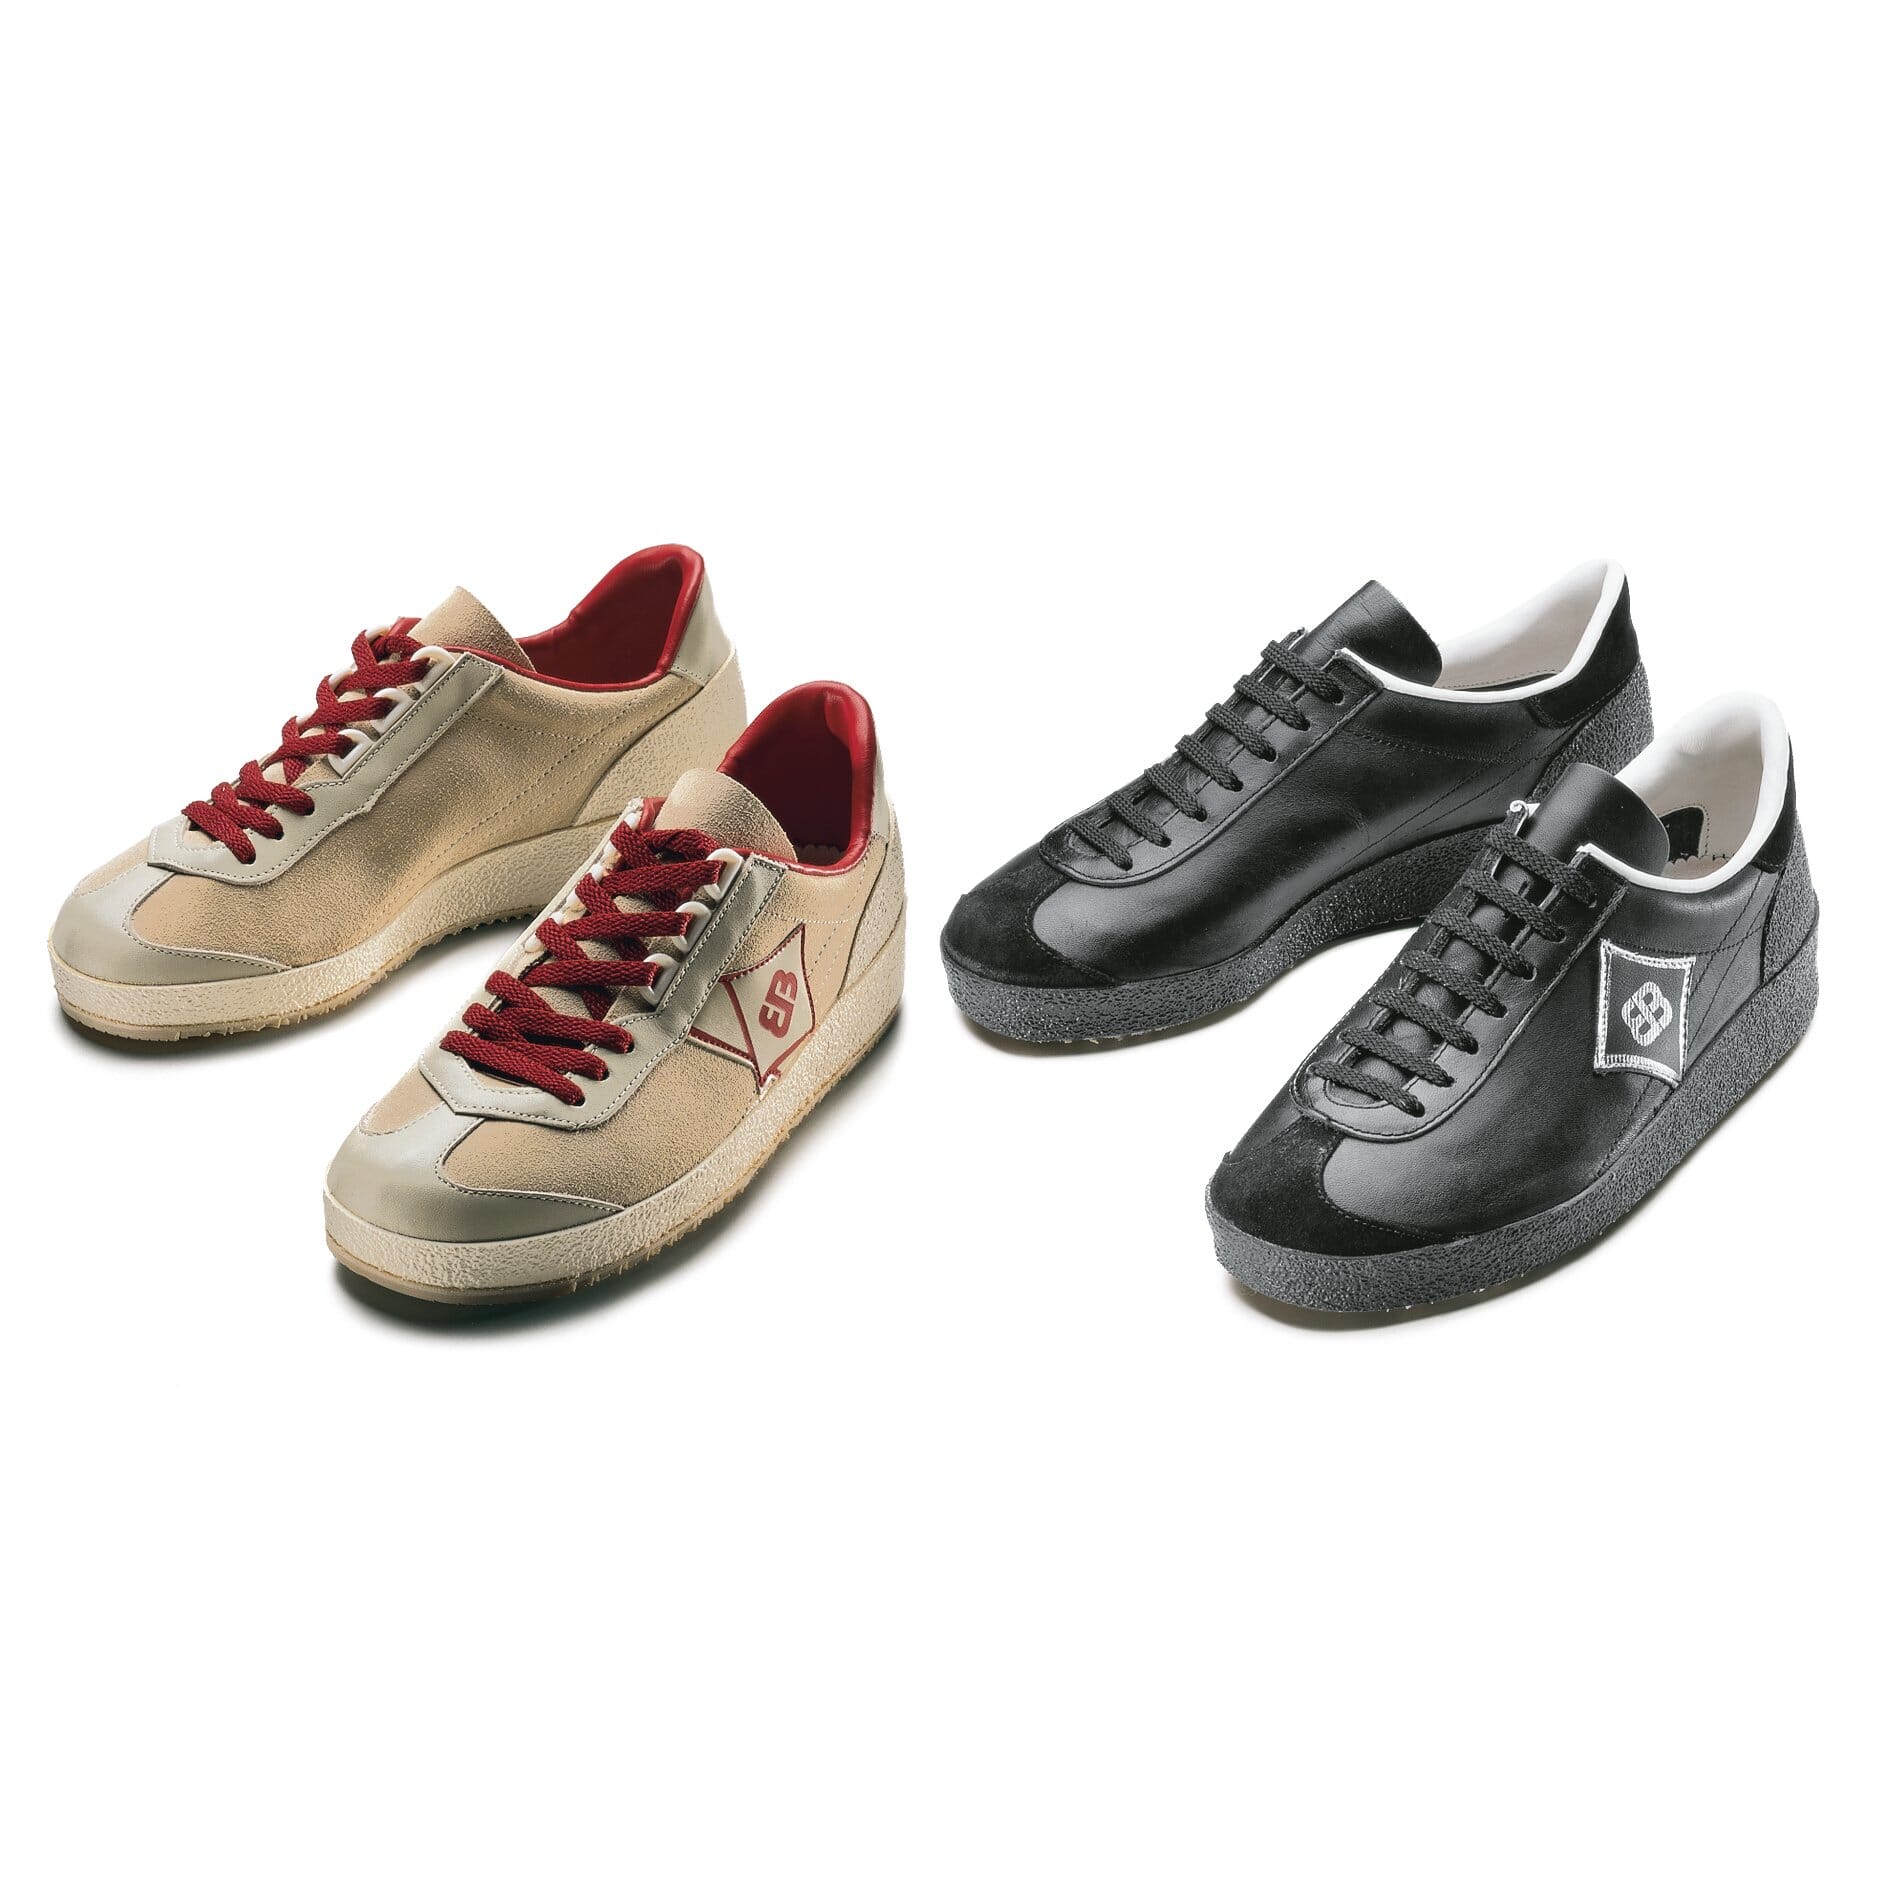 Reebok Shoes: Men's Steel Toe RB4090 All Terrain EH Black Athletic Work  Shoes